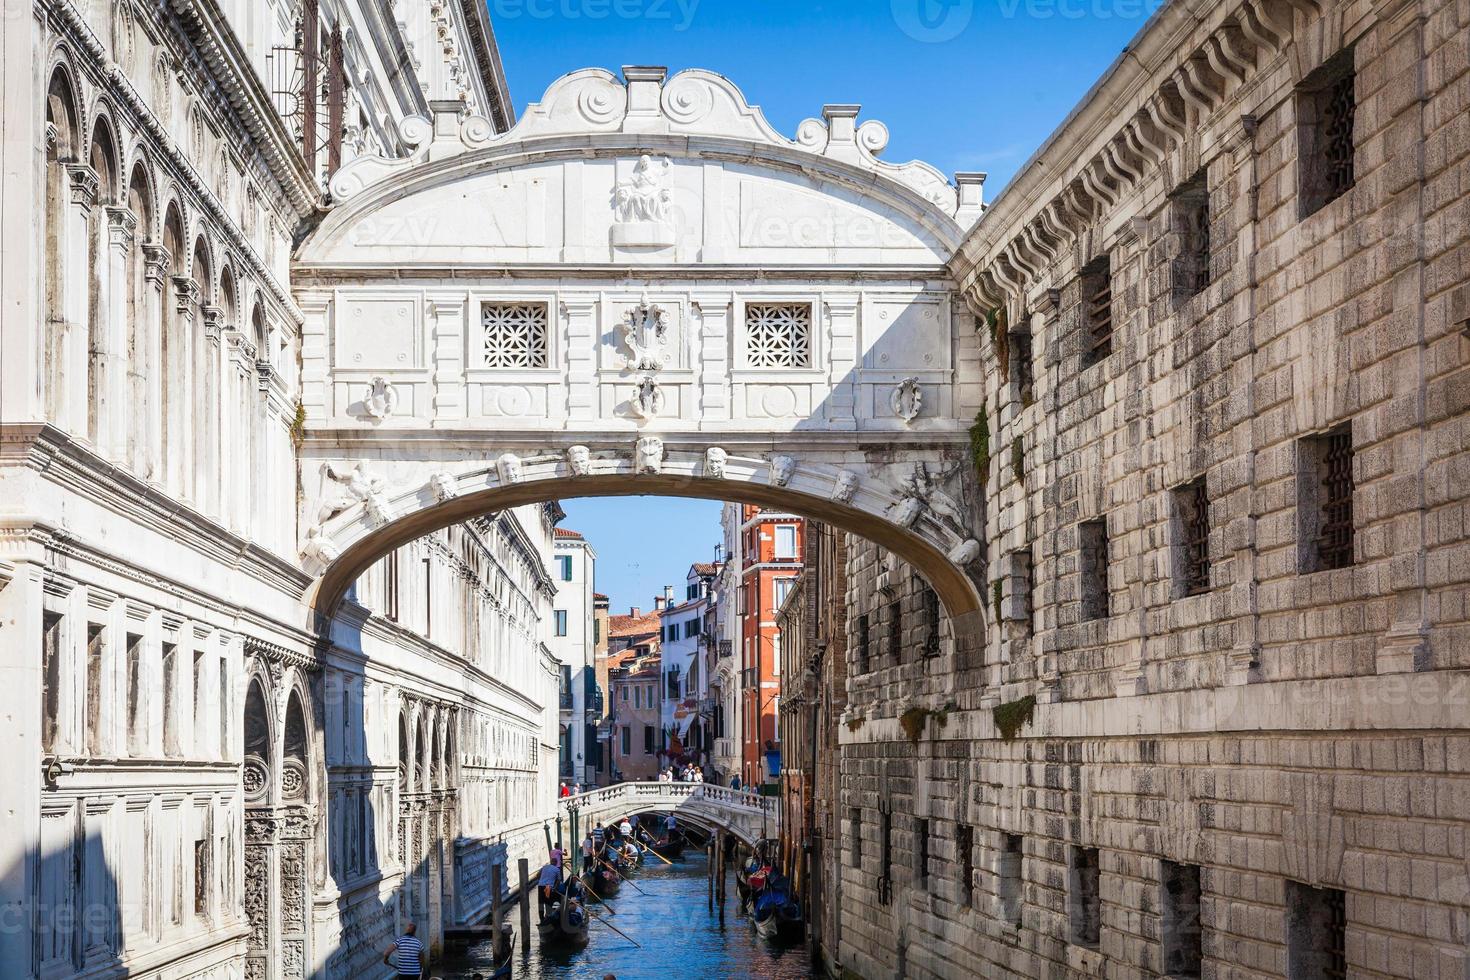 veneza, itália ponte dos suspiros foto